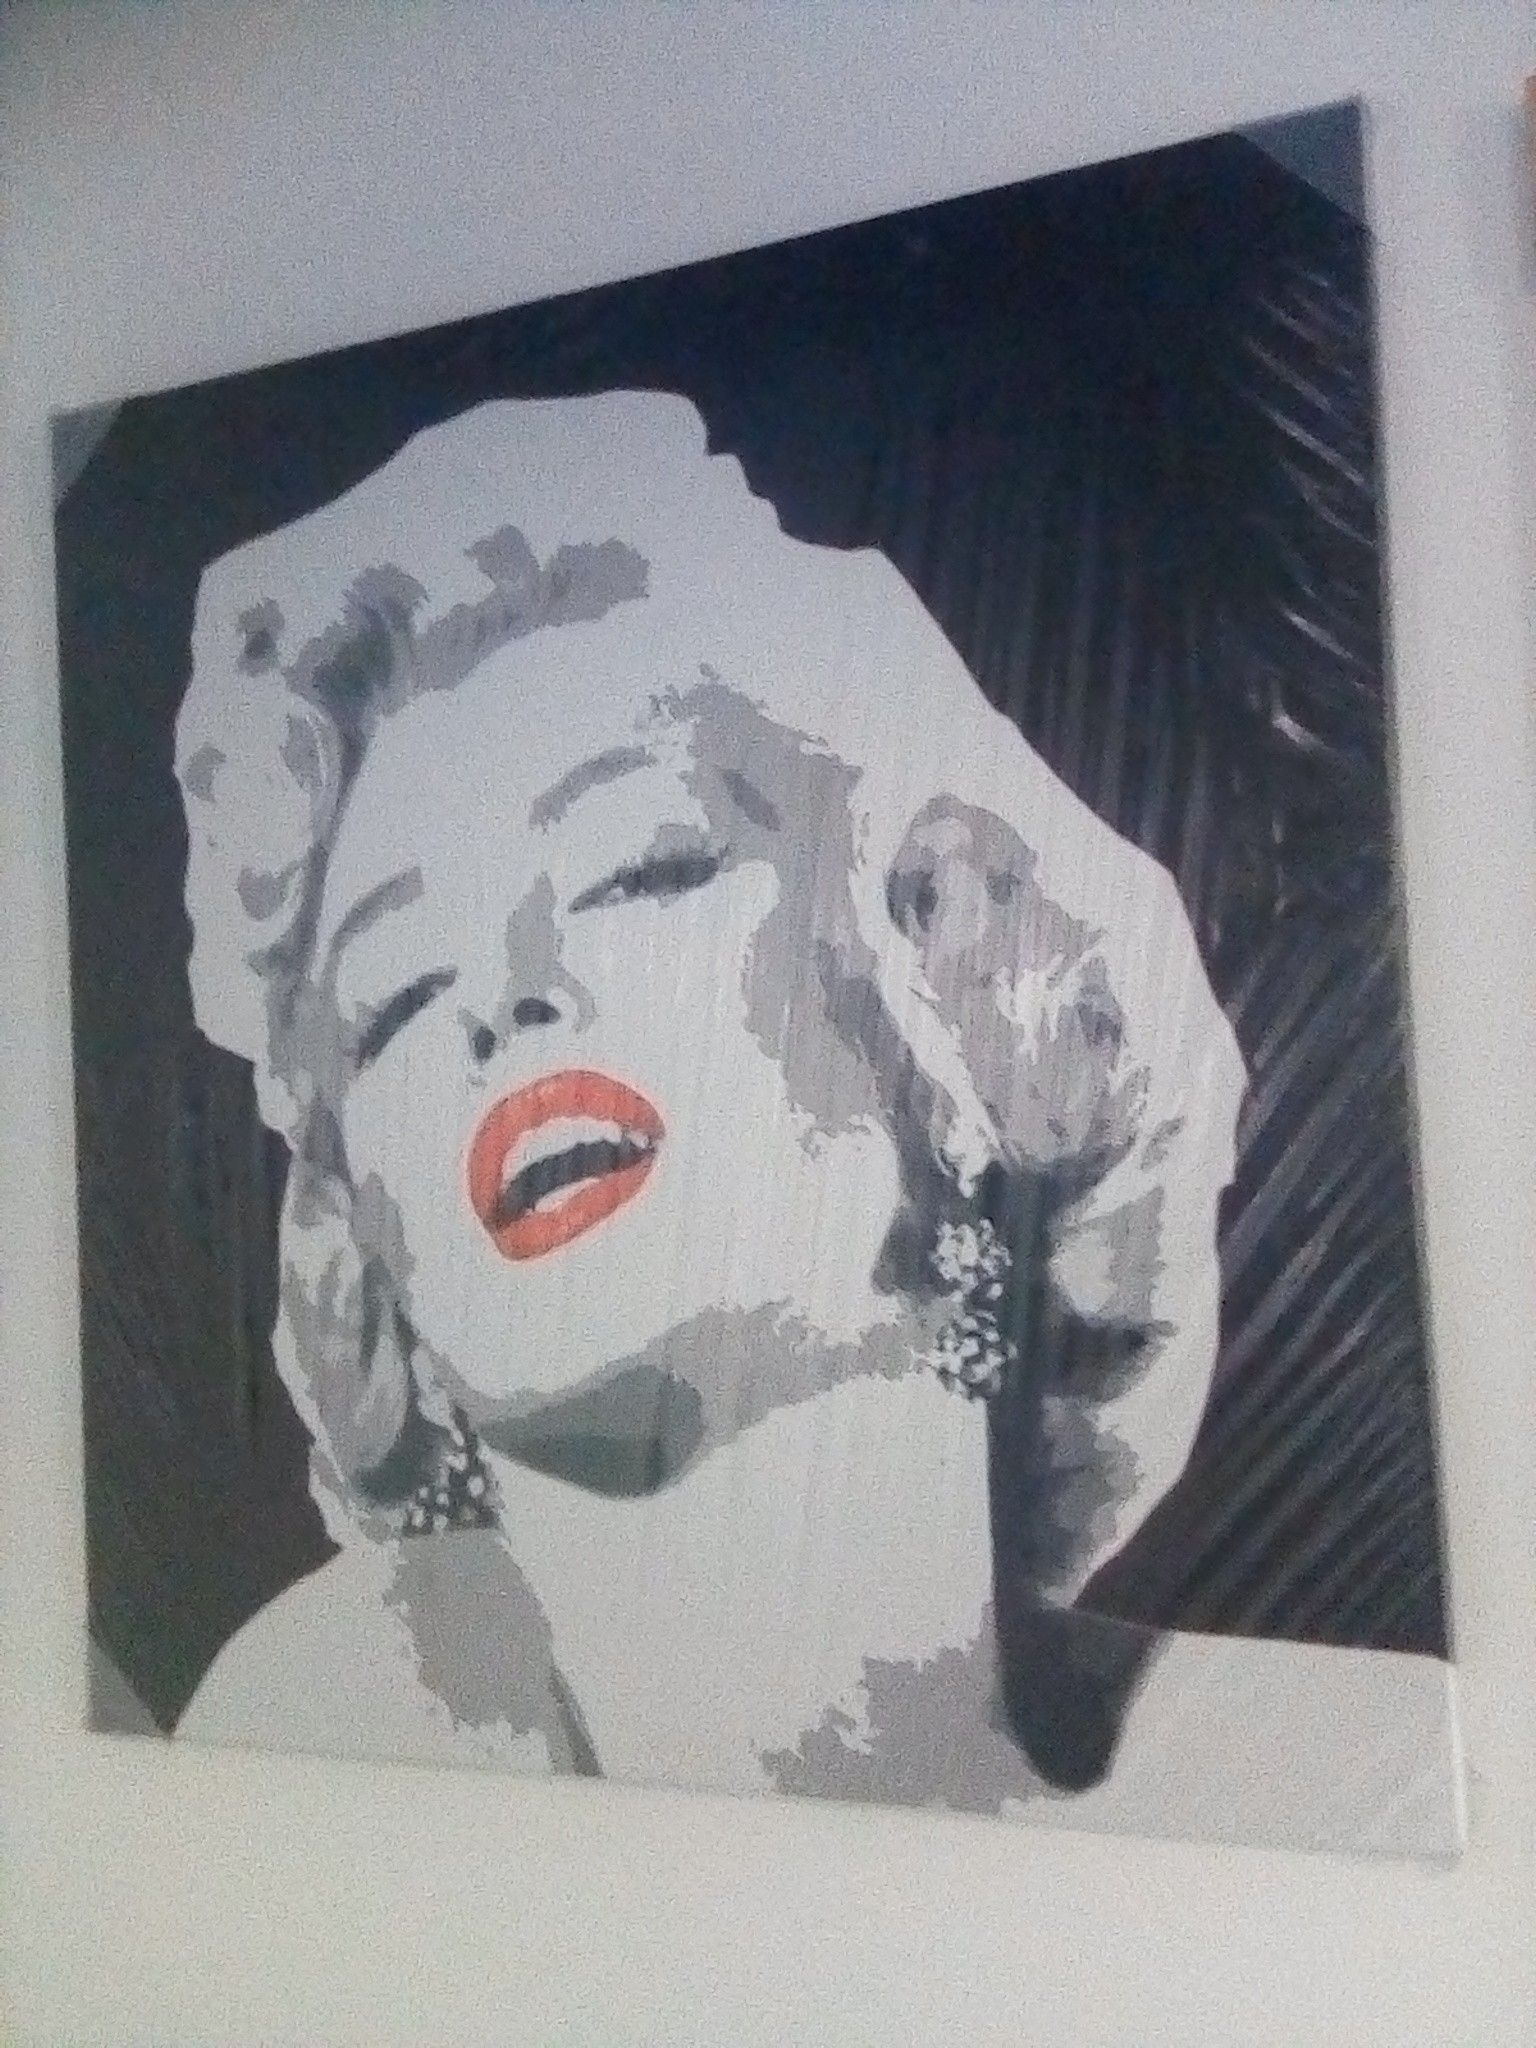 Marilyn Monroe Print on Canvas